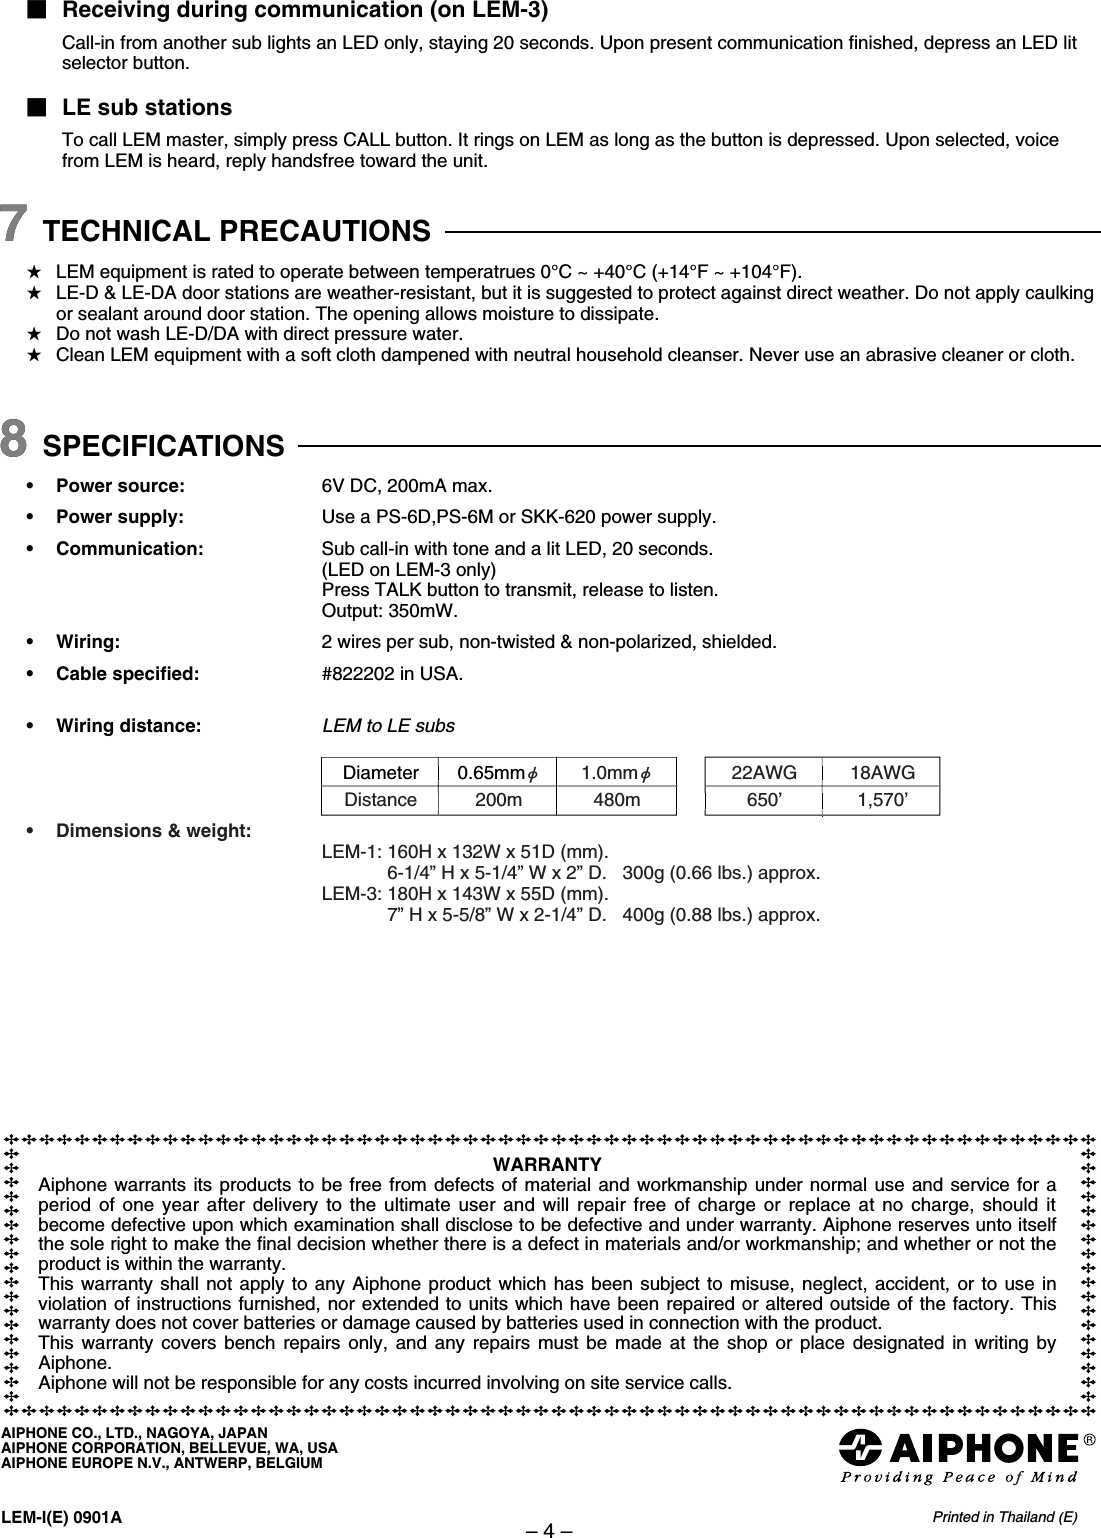 Page 4 of 4 - Aiphone LEM-1 And LEM-3 Master Selective Intercom Instructions LEM-13Instr0901